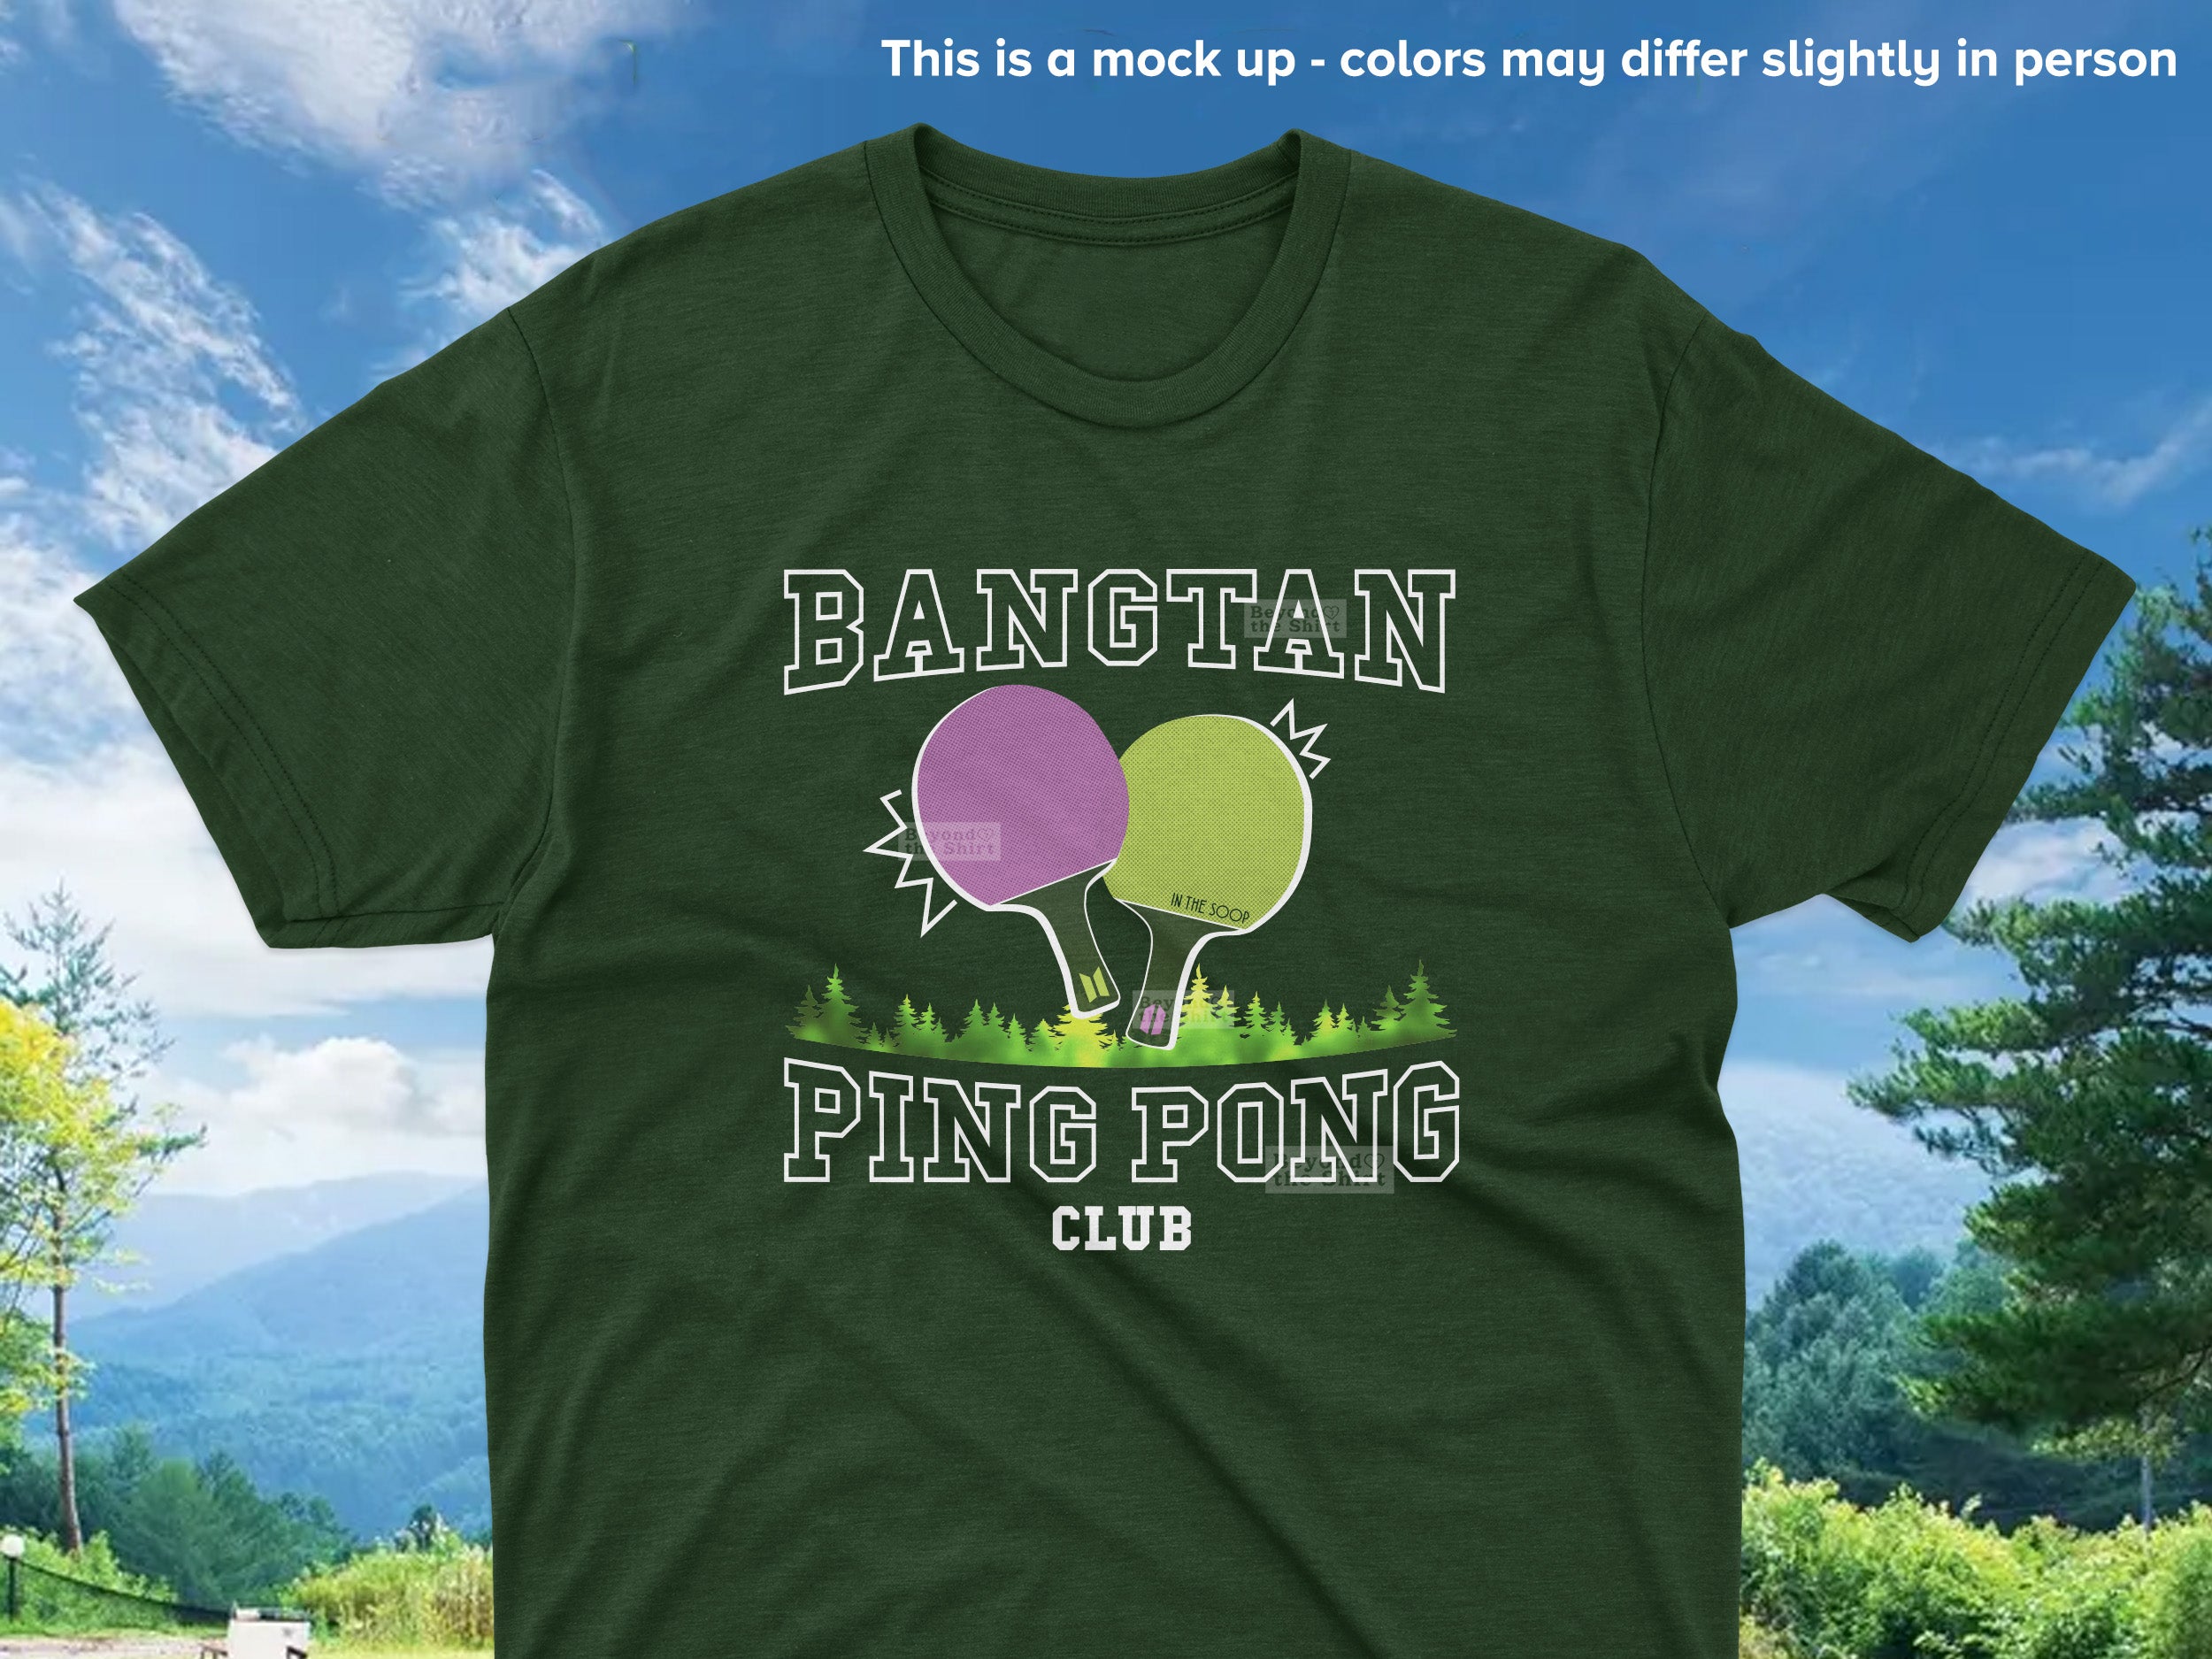 Bangtan Ping Pong Club Shirts and Hoodies